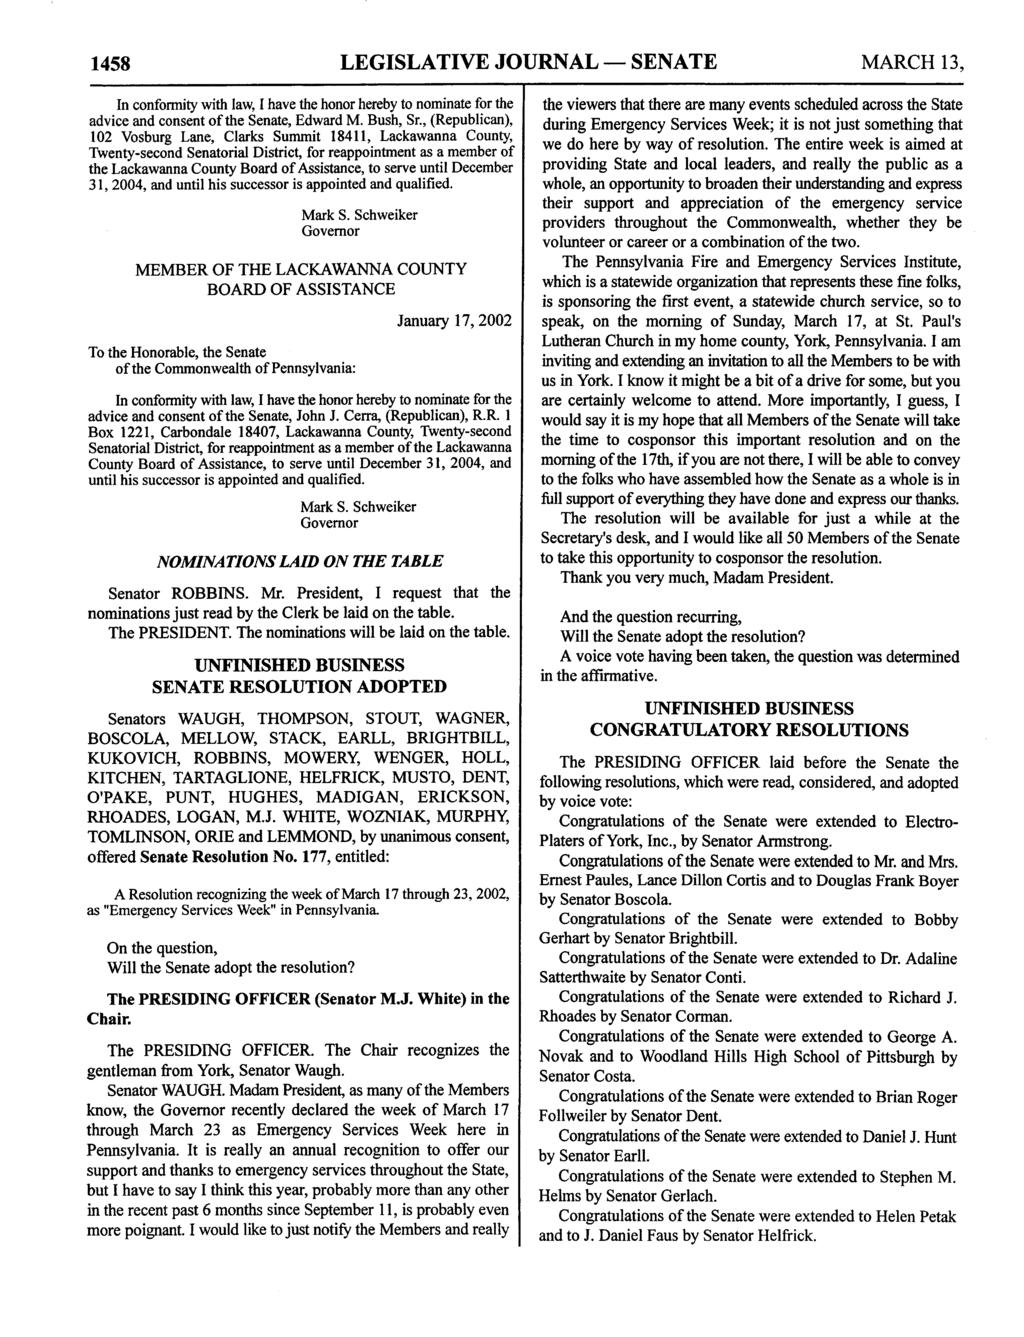 1458 LEGISLATIVE JOURNAL SENATE MARCH 13, advice and consent of the Senate, Edward M. Bush, Sr.